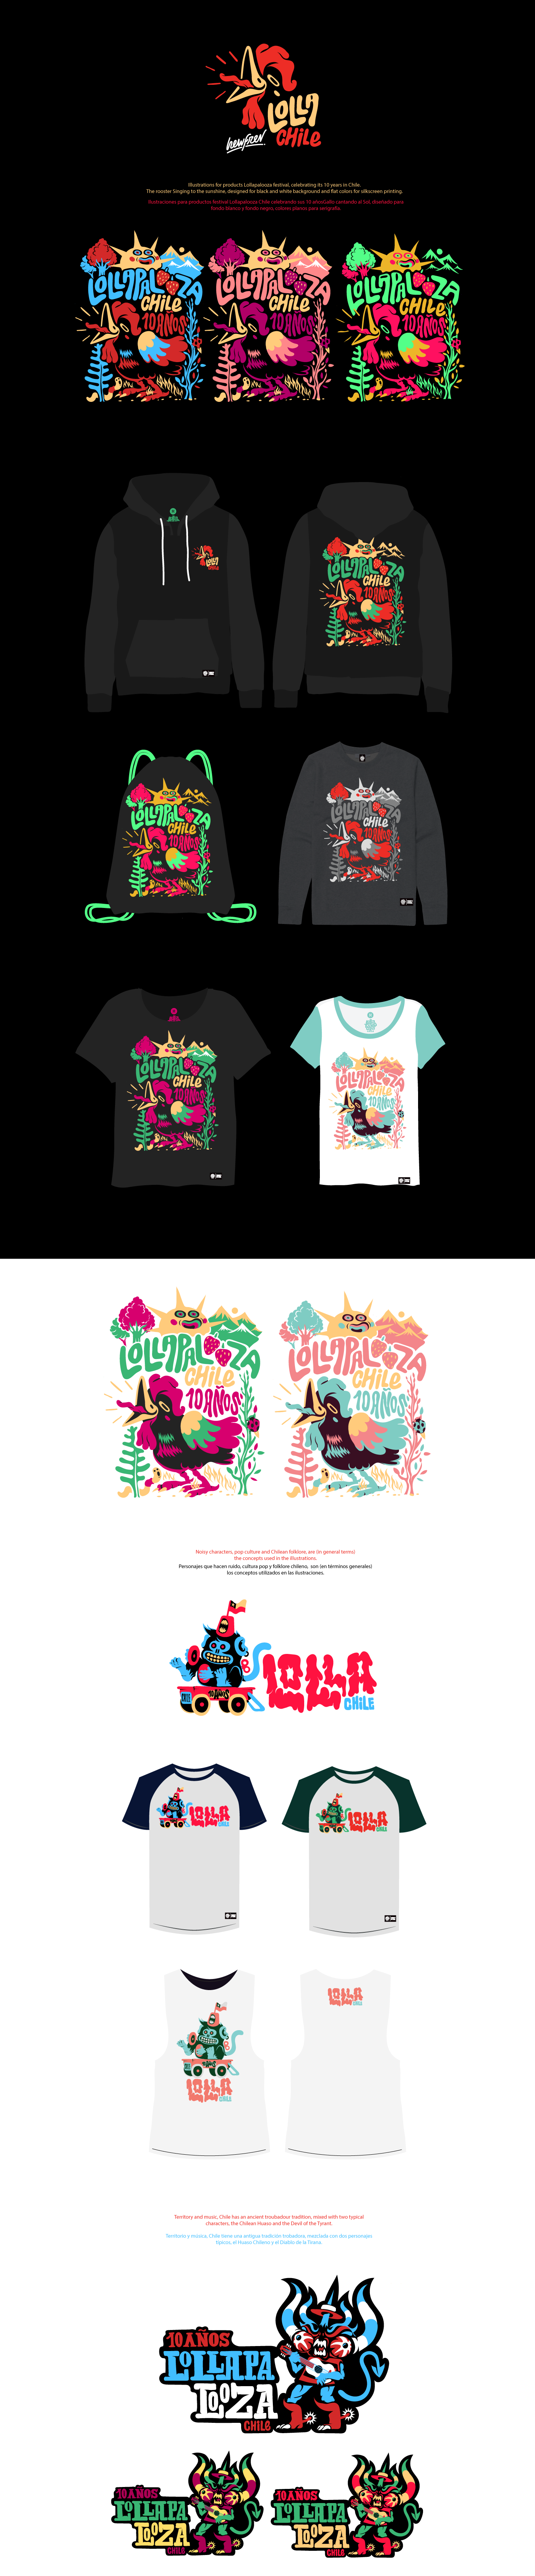 brands characters clothes Clothing logos lollapalooza Merch merchadising shirt tshirts